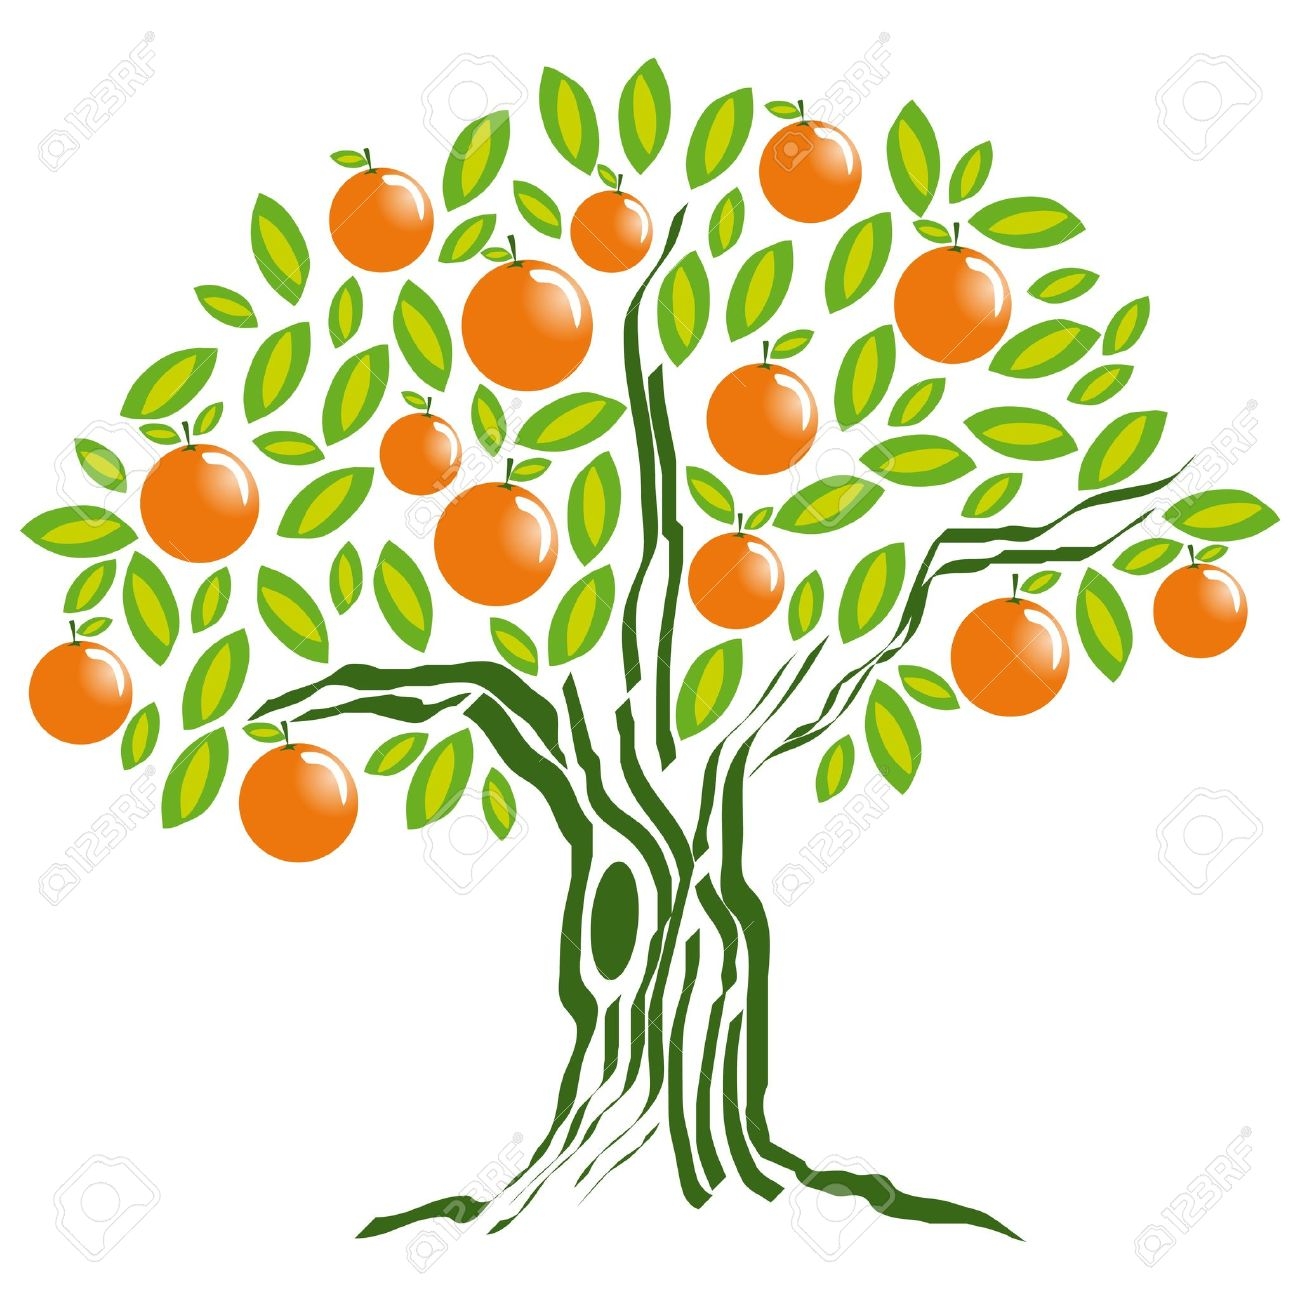 Orange tree clipart - Clipground